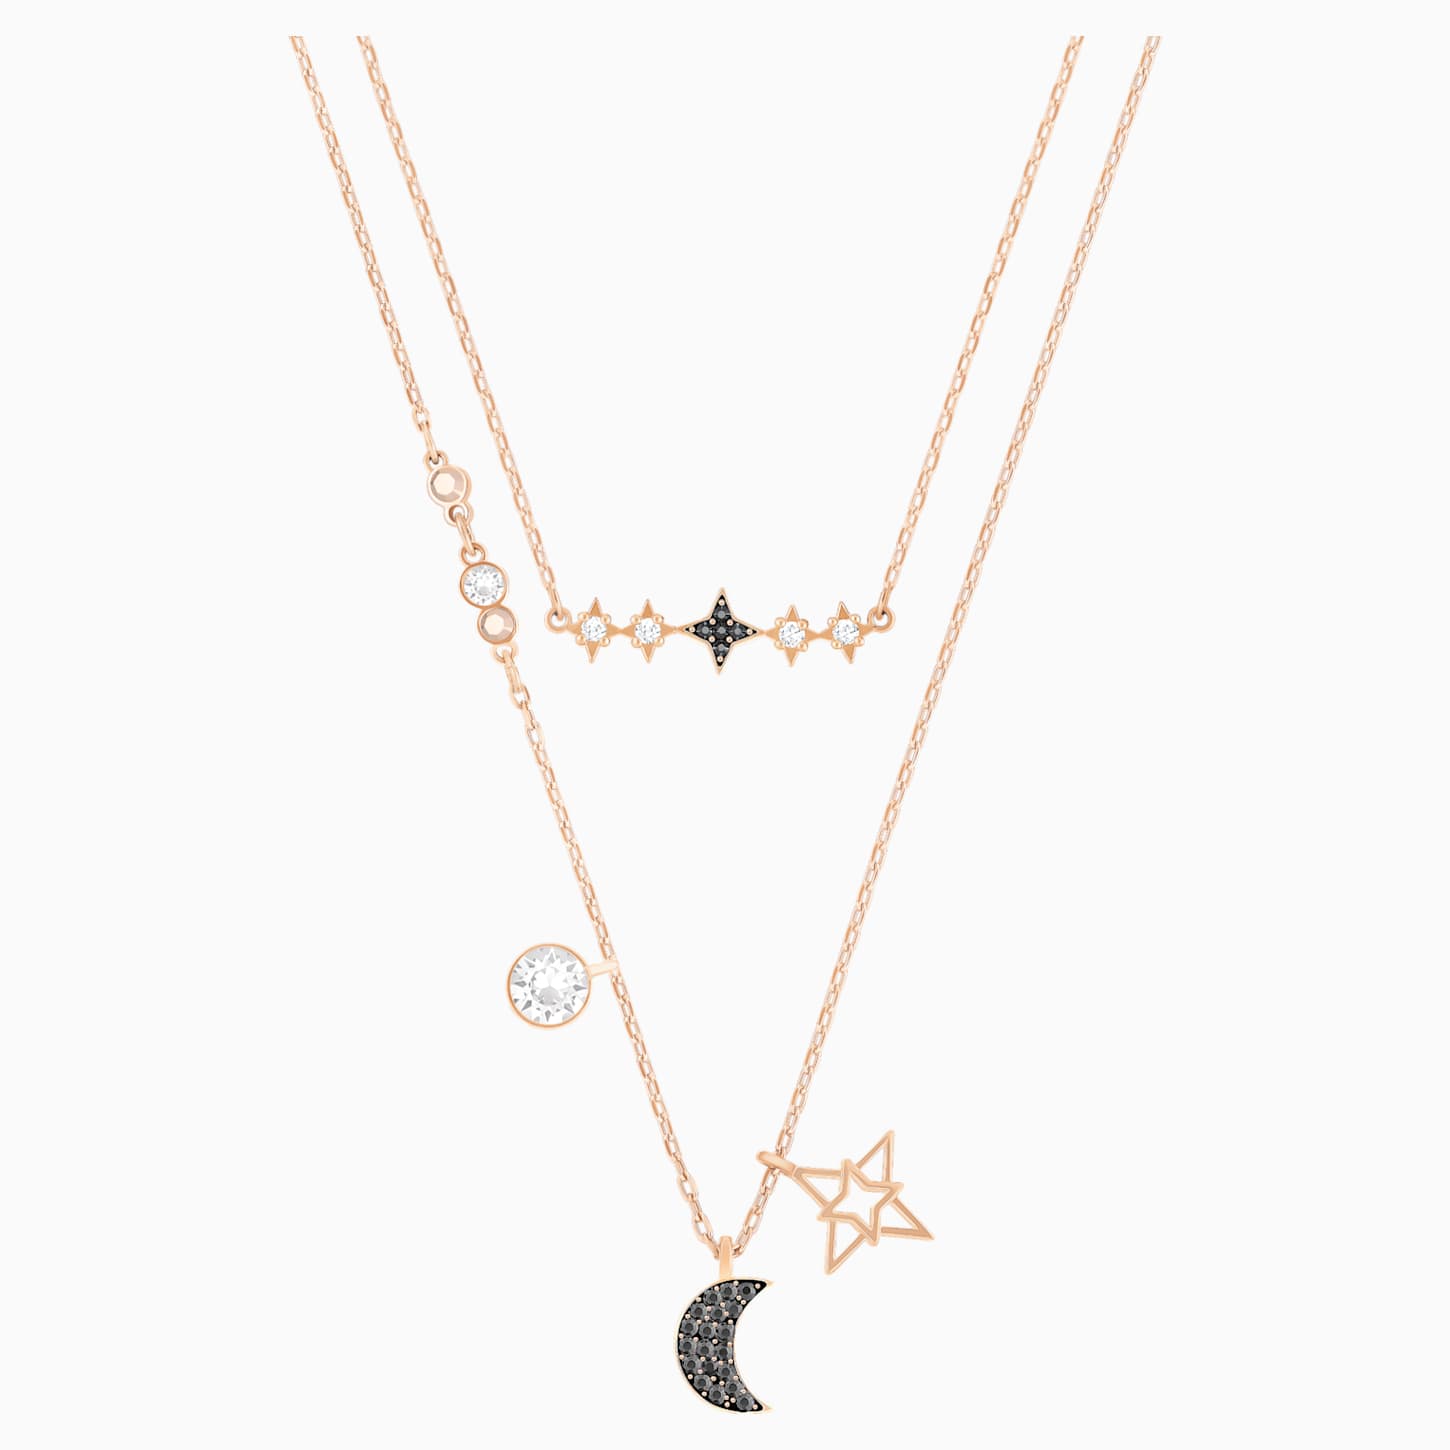 Swarovski Symbolic Moon Necklace Set, Multi-colored, Mixed metal finish ...